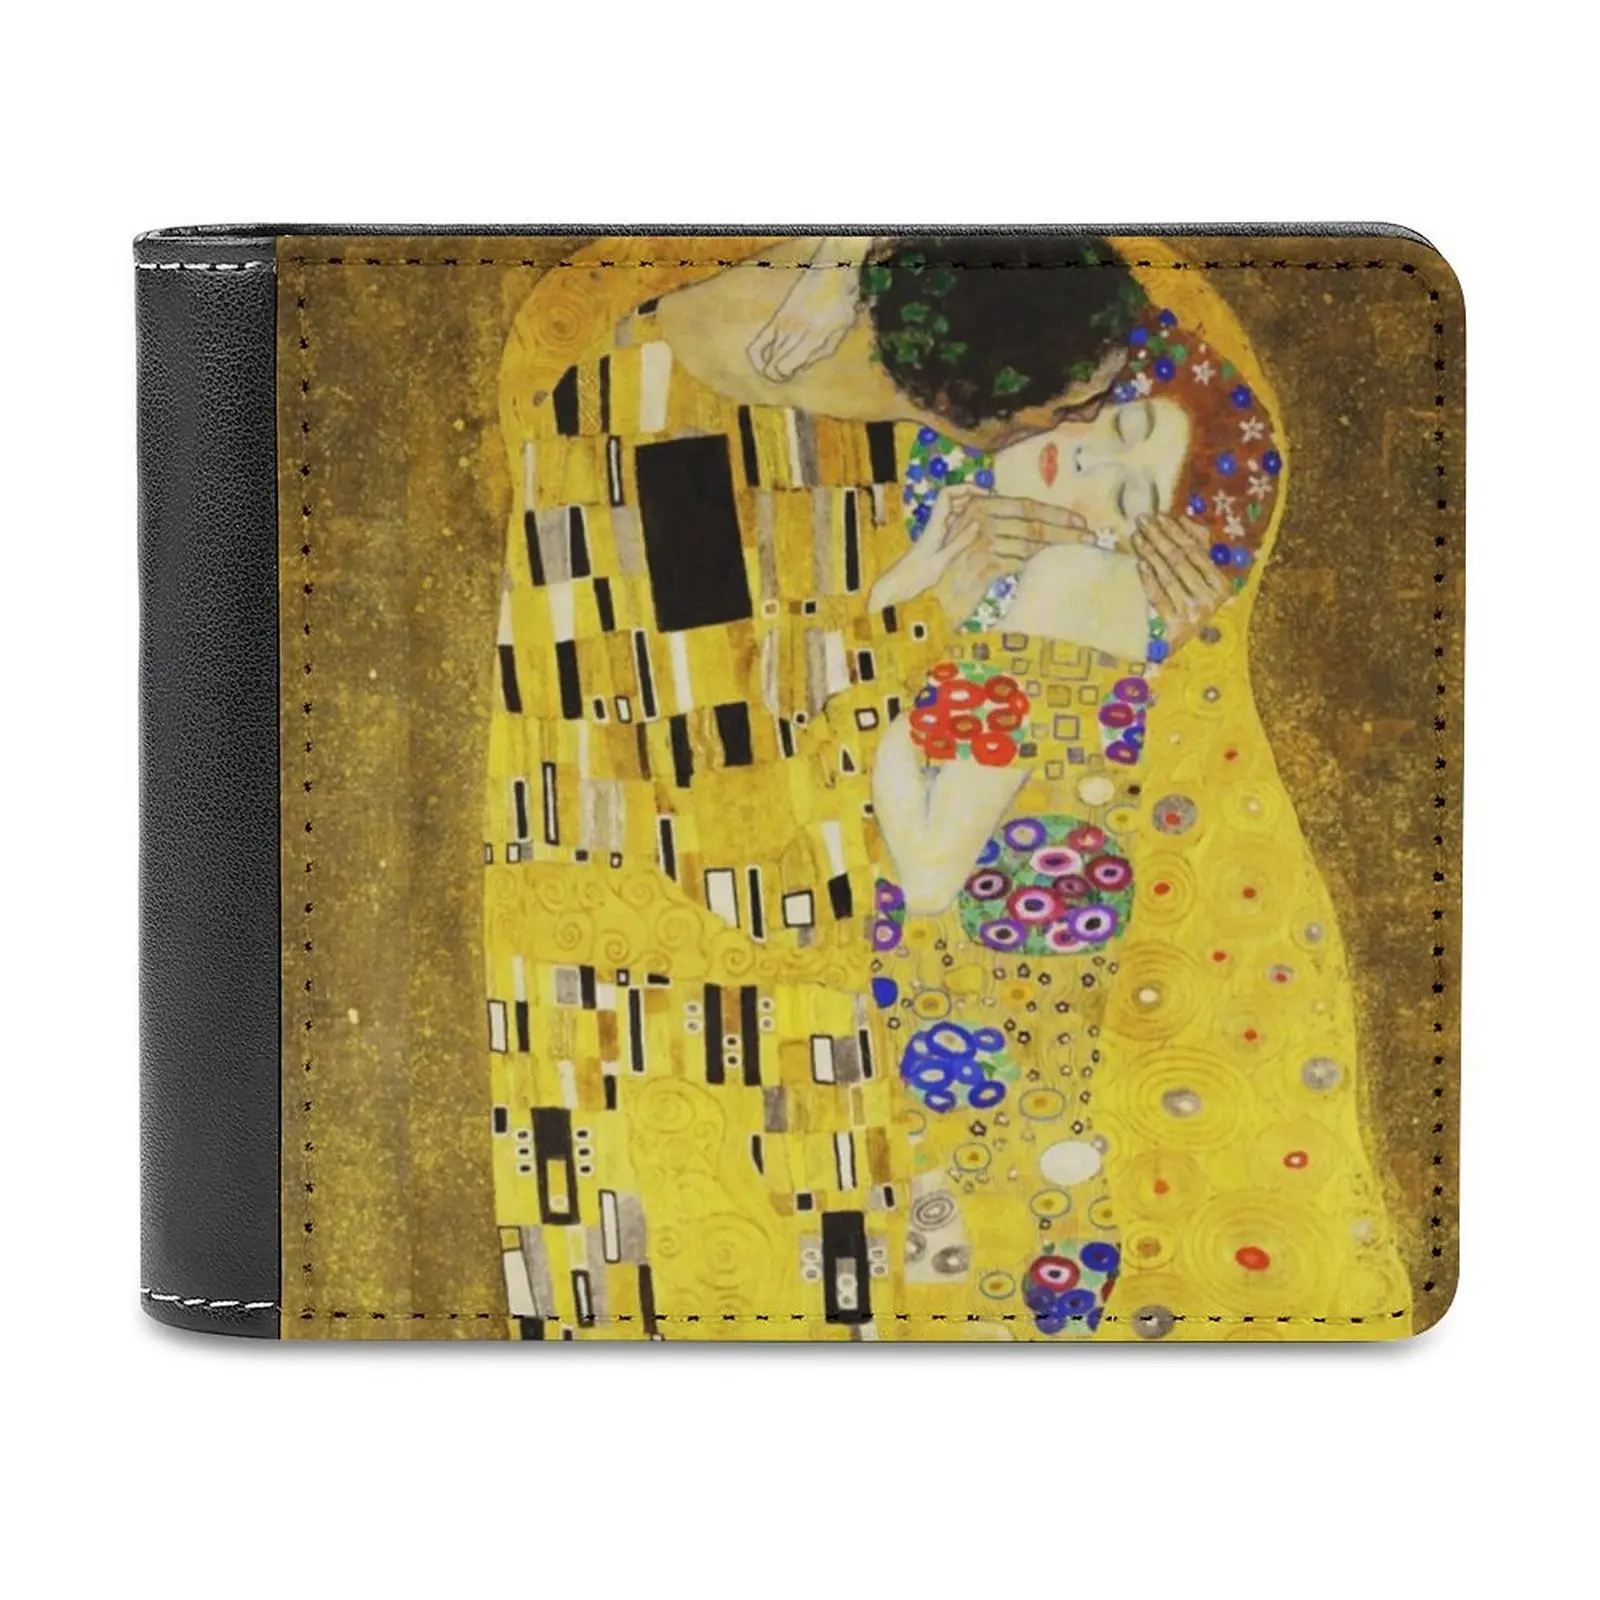 

Klimt The Kiss кожаный кошелек мужской классический черный кошелек кредитница модный мужской кошелек Klimt The Kiss Klimt kkiss Kiss